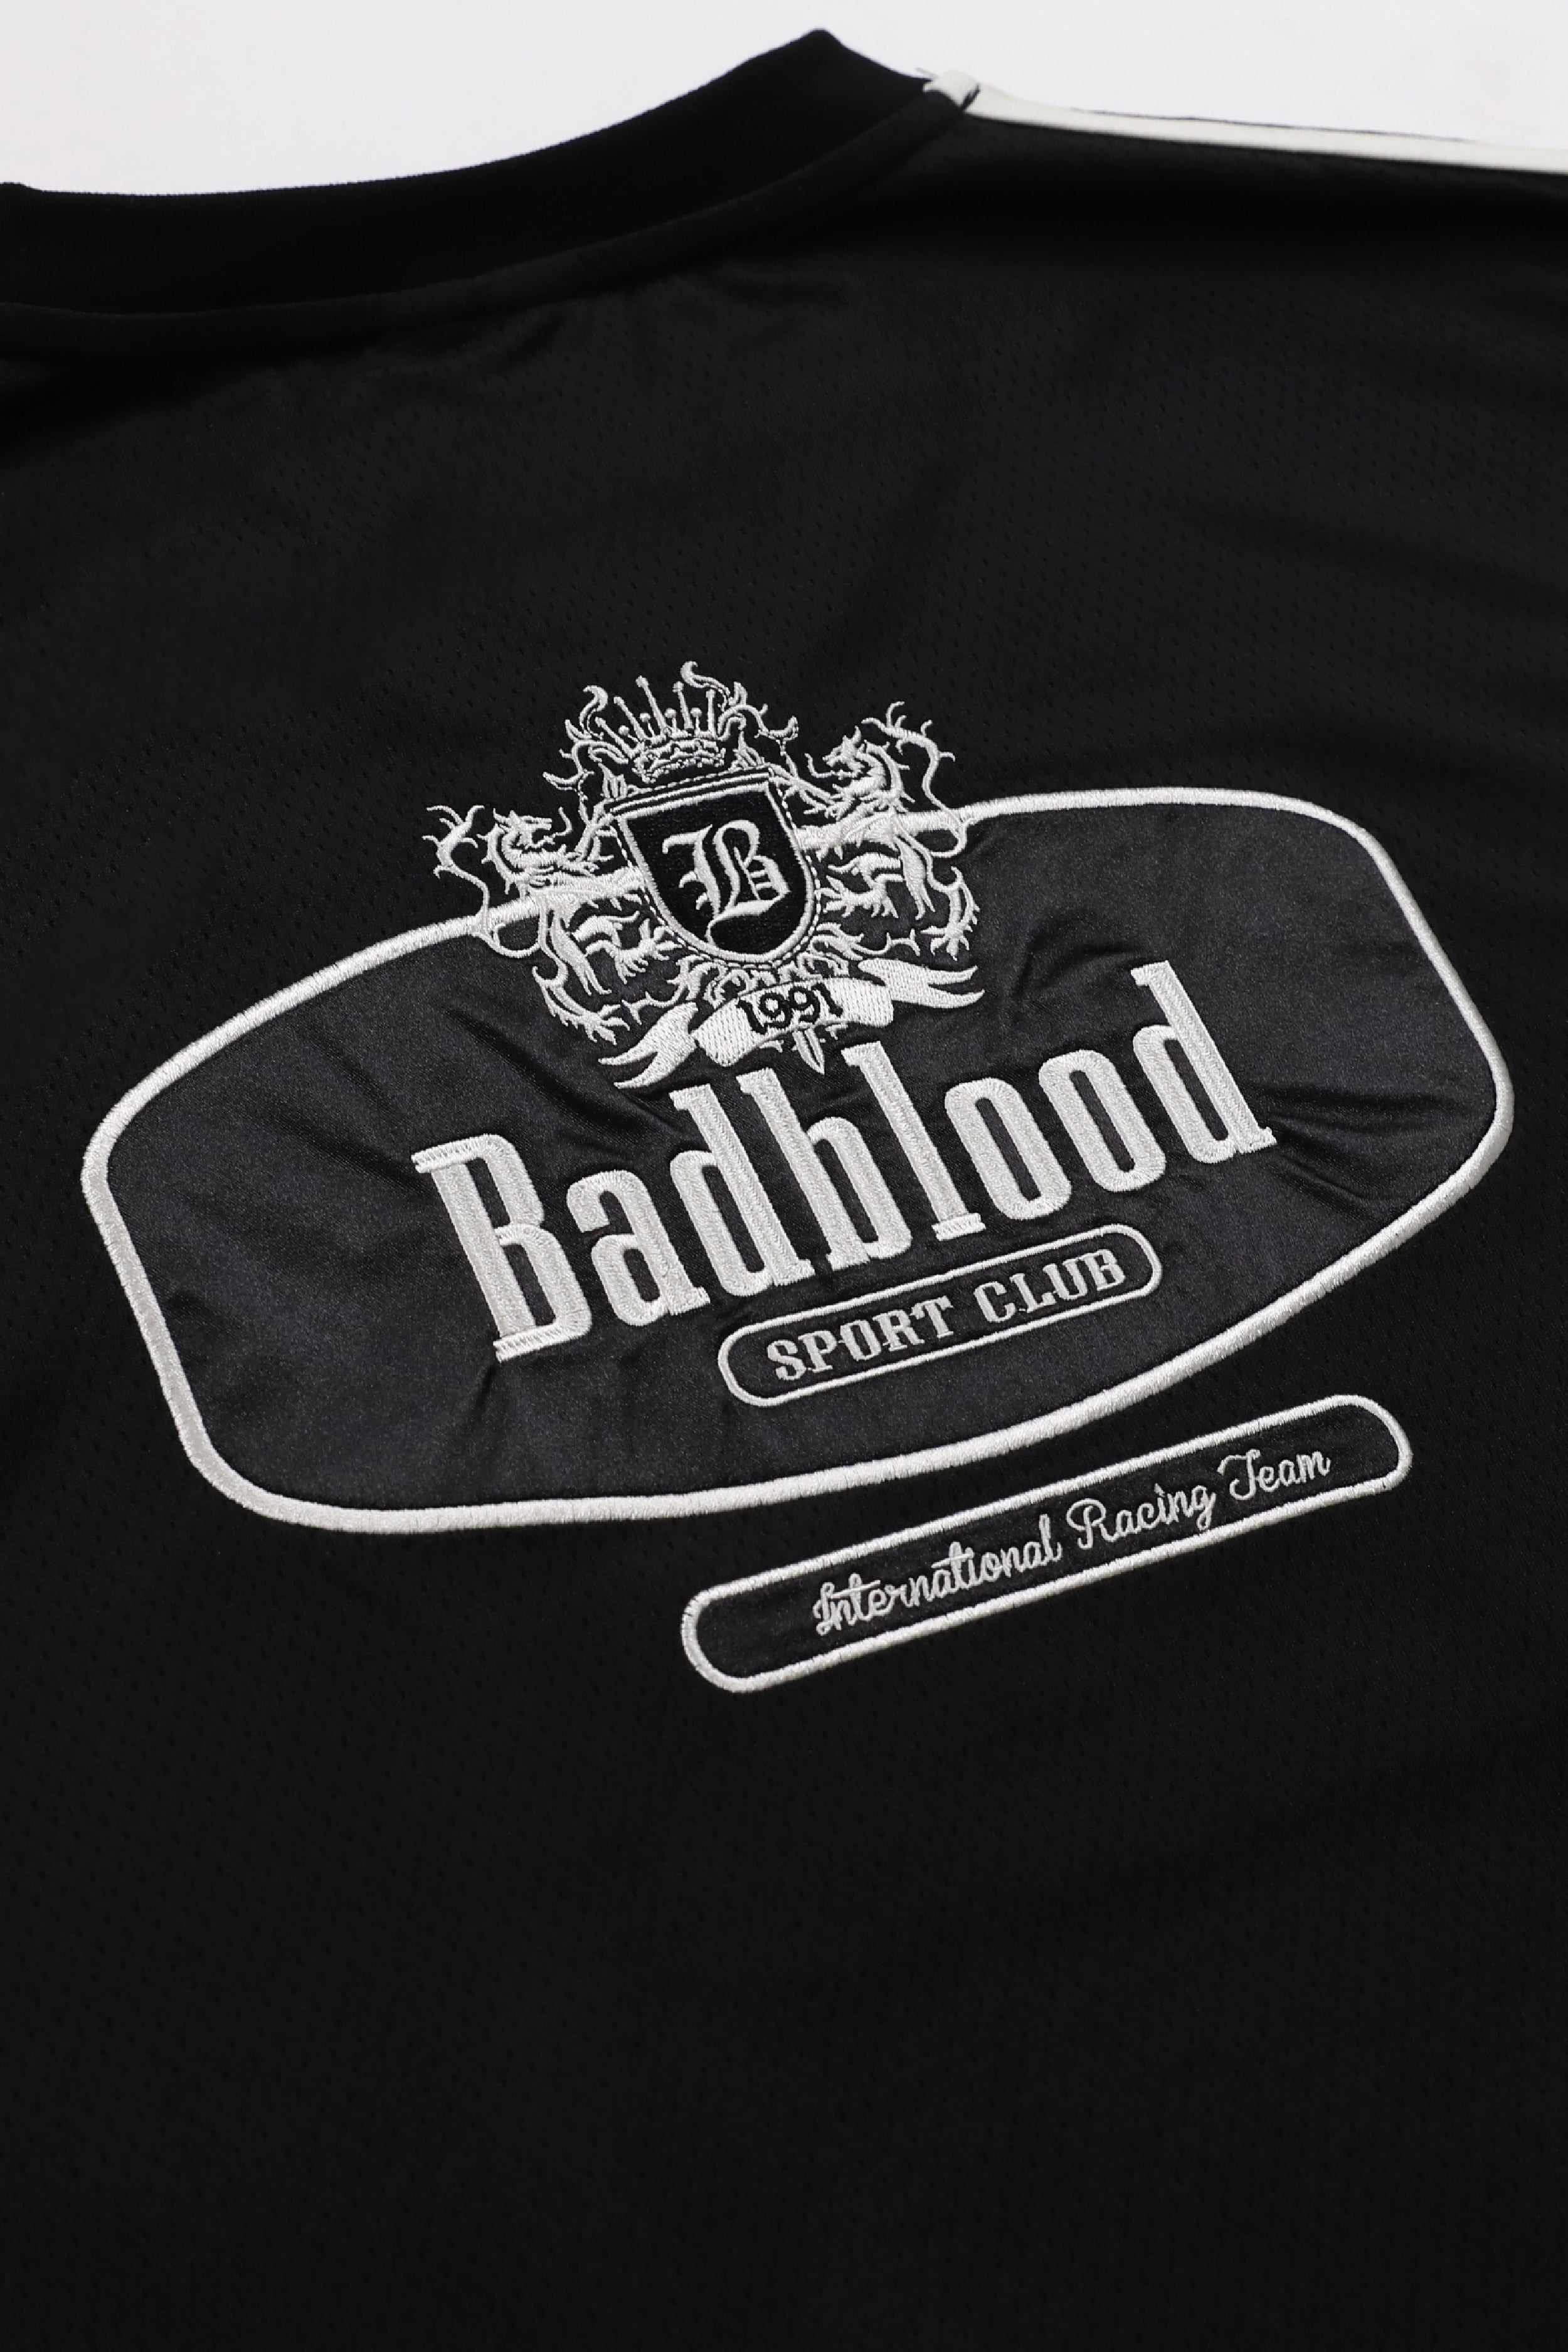 Badblood Sports Club 1/2 Tee Black